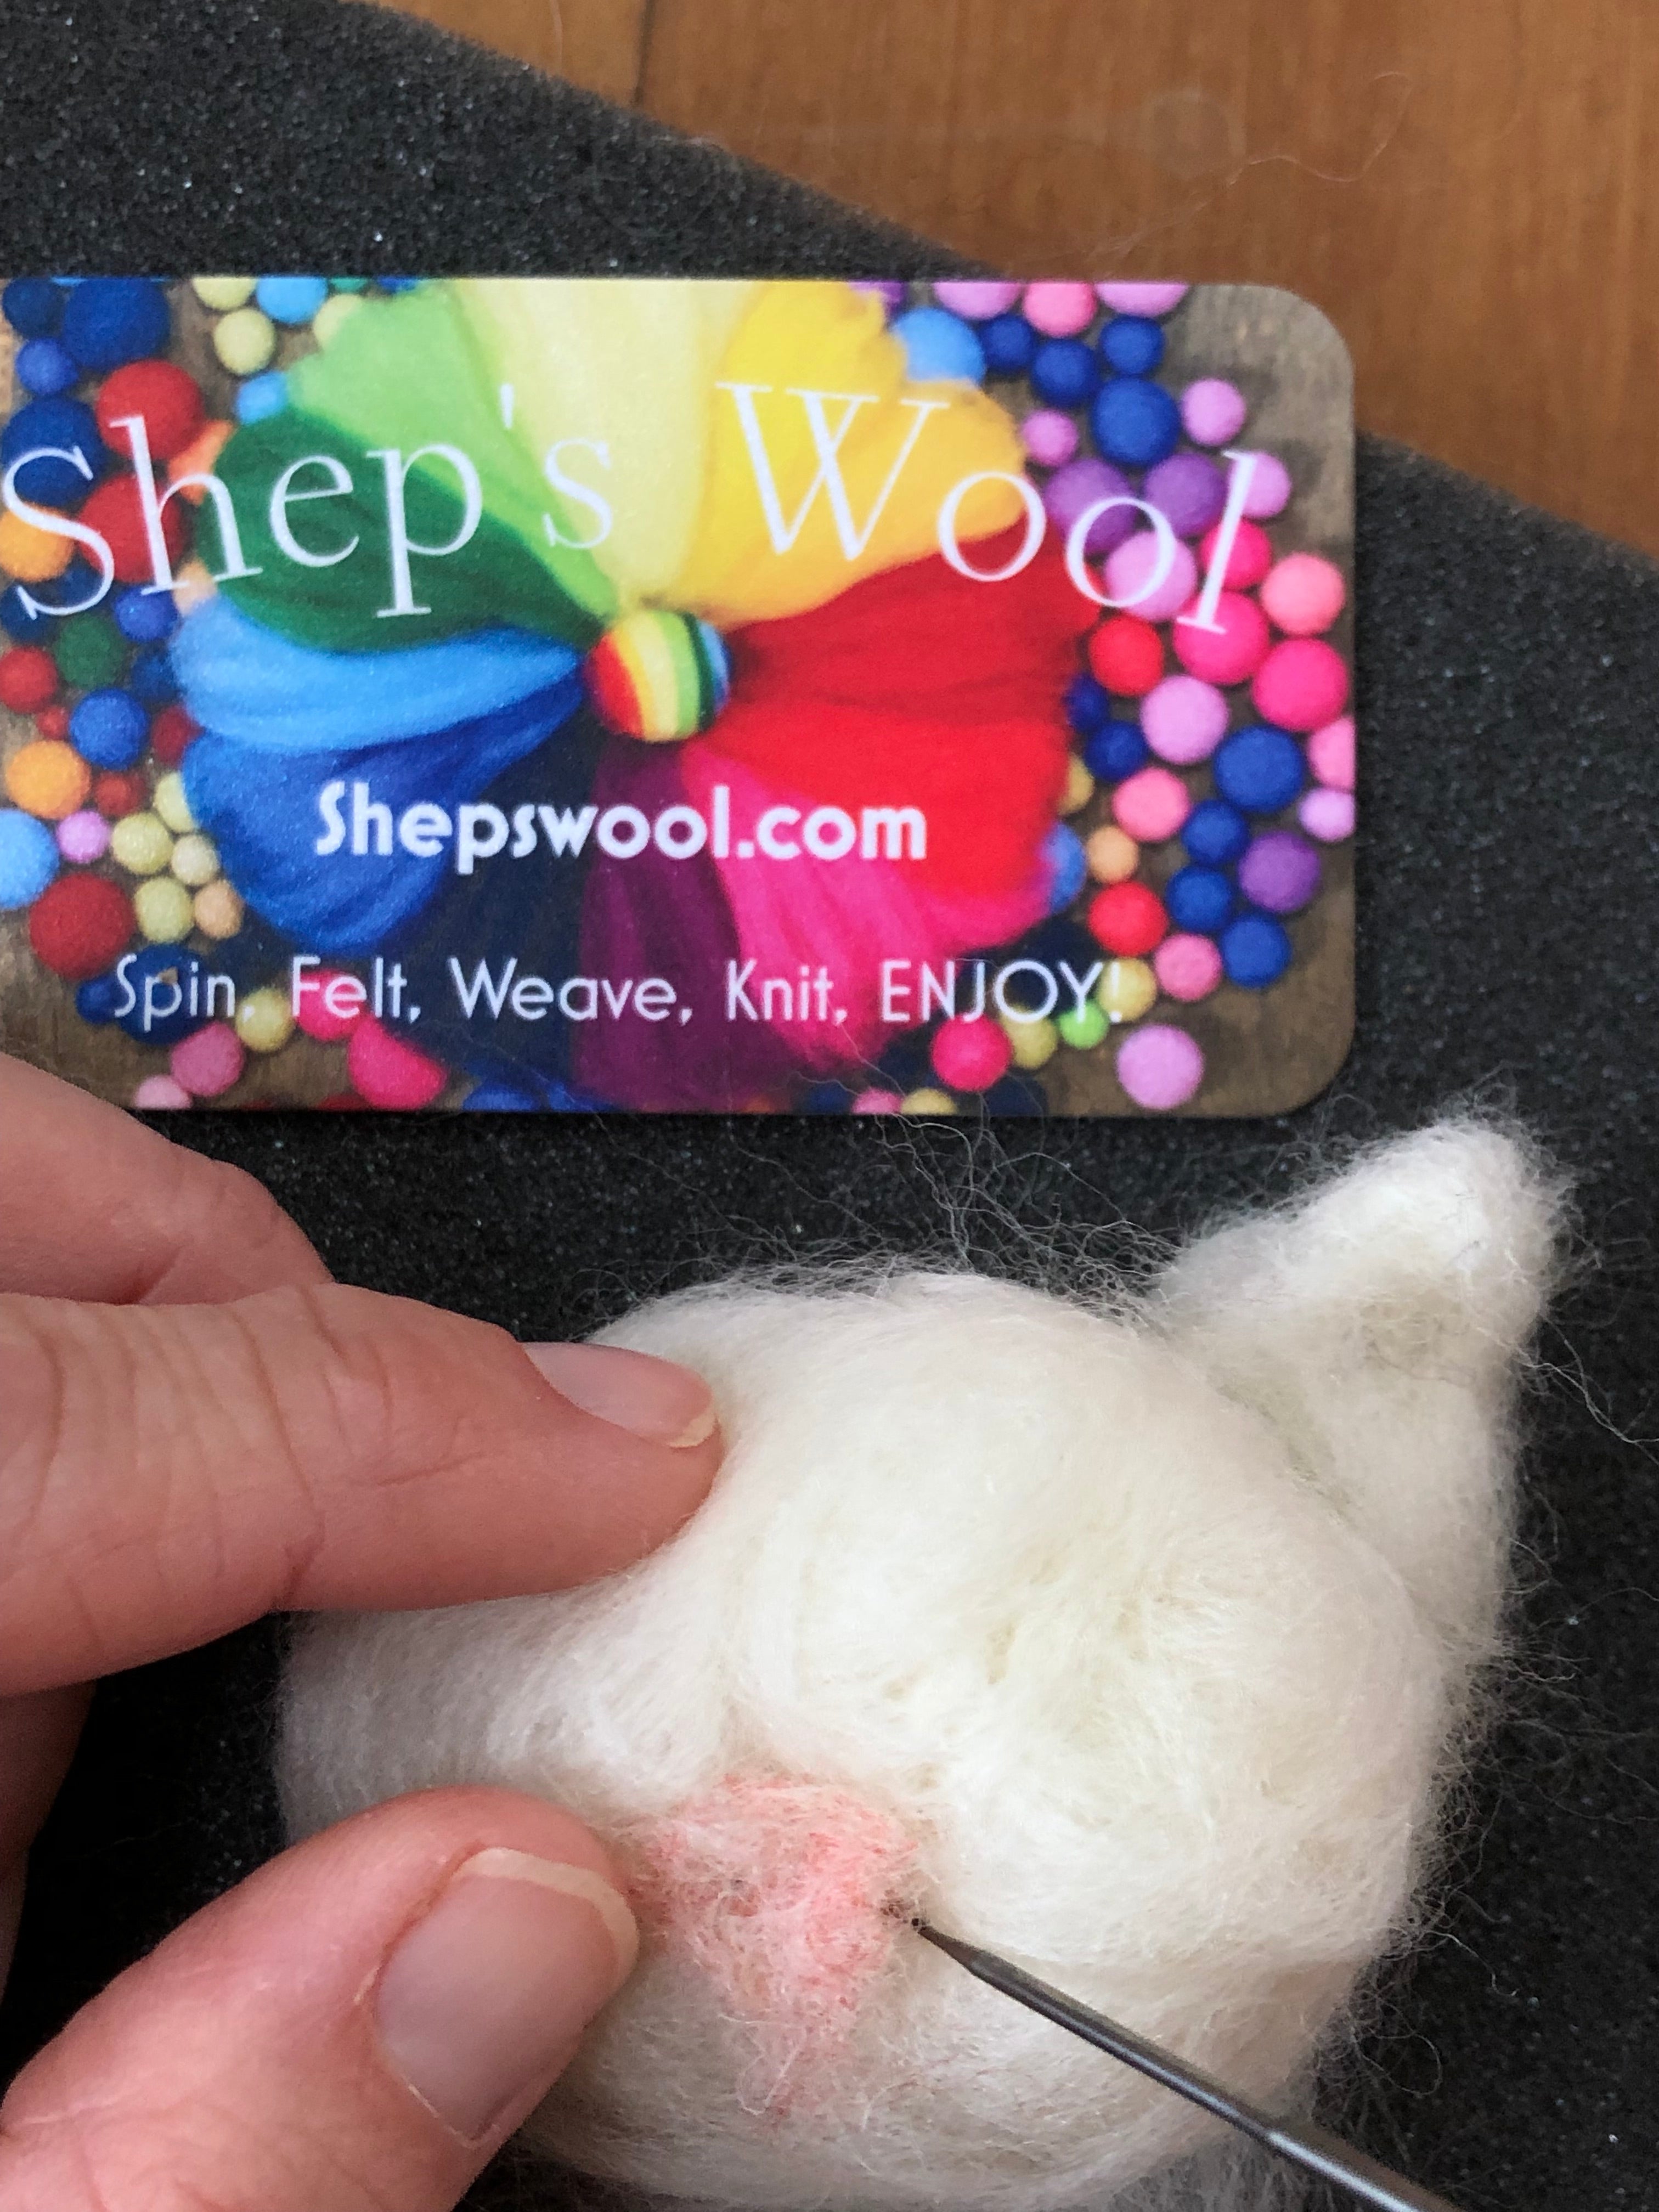 where can i buy felting wool